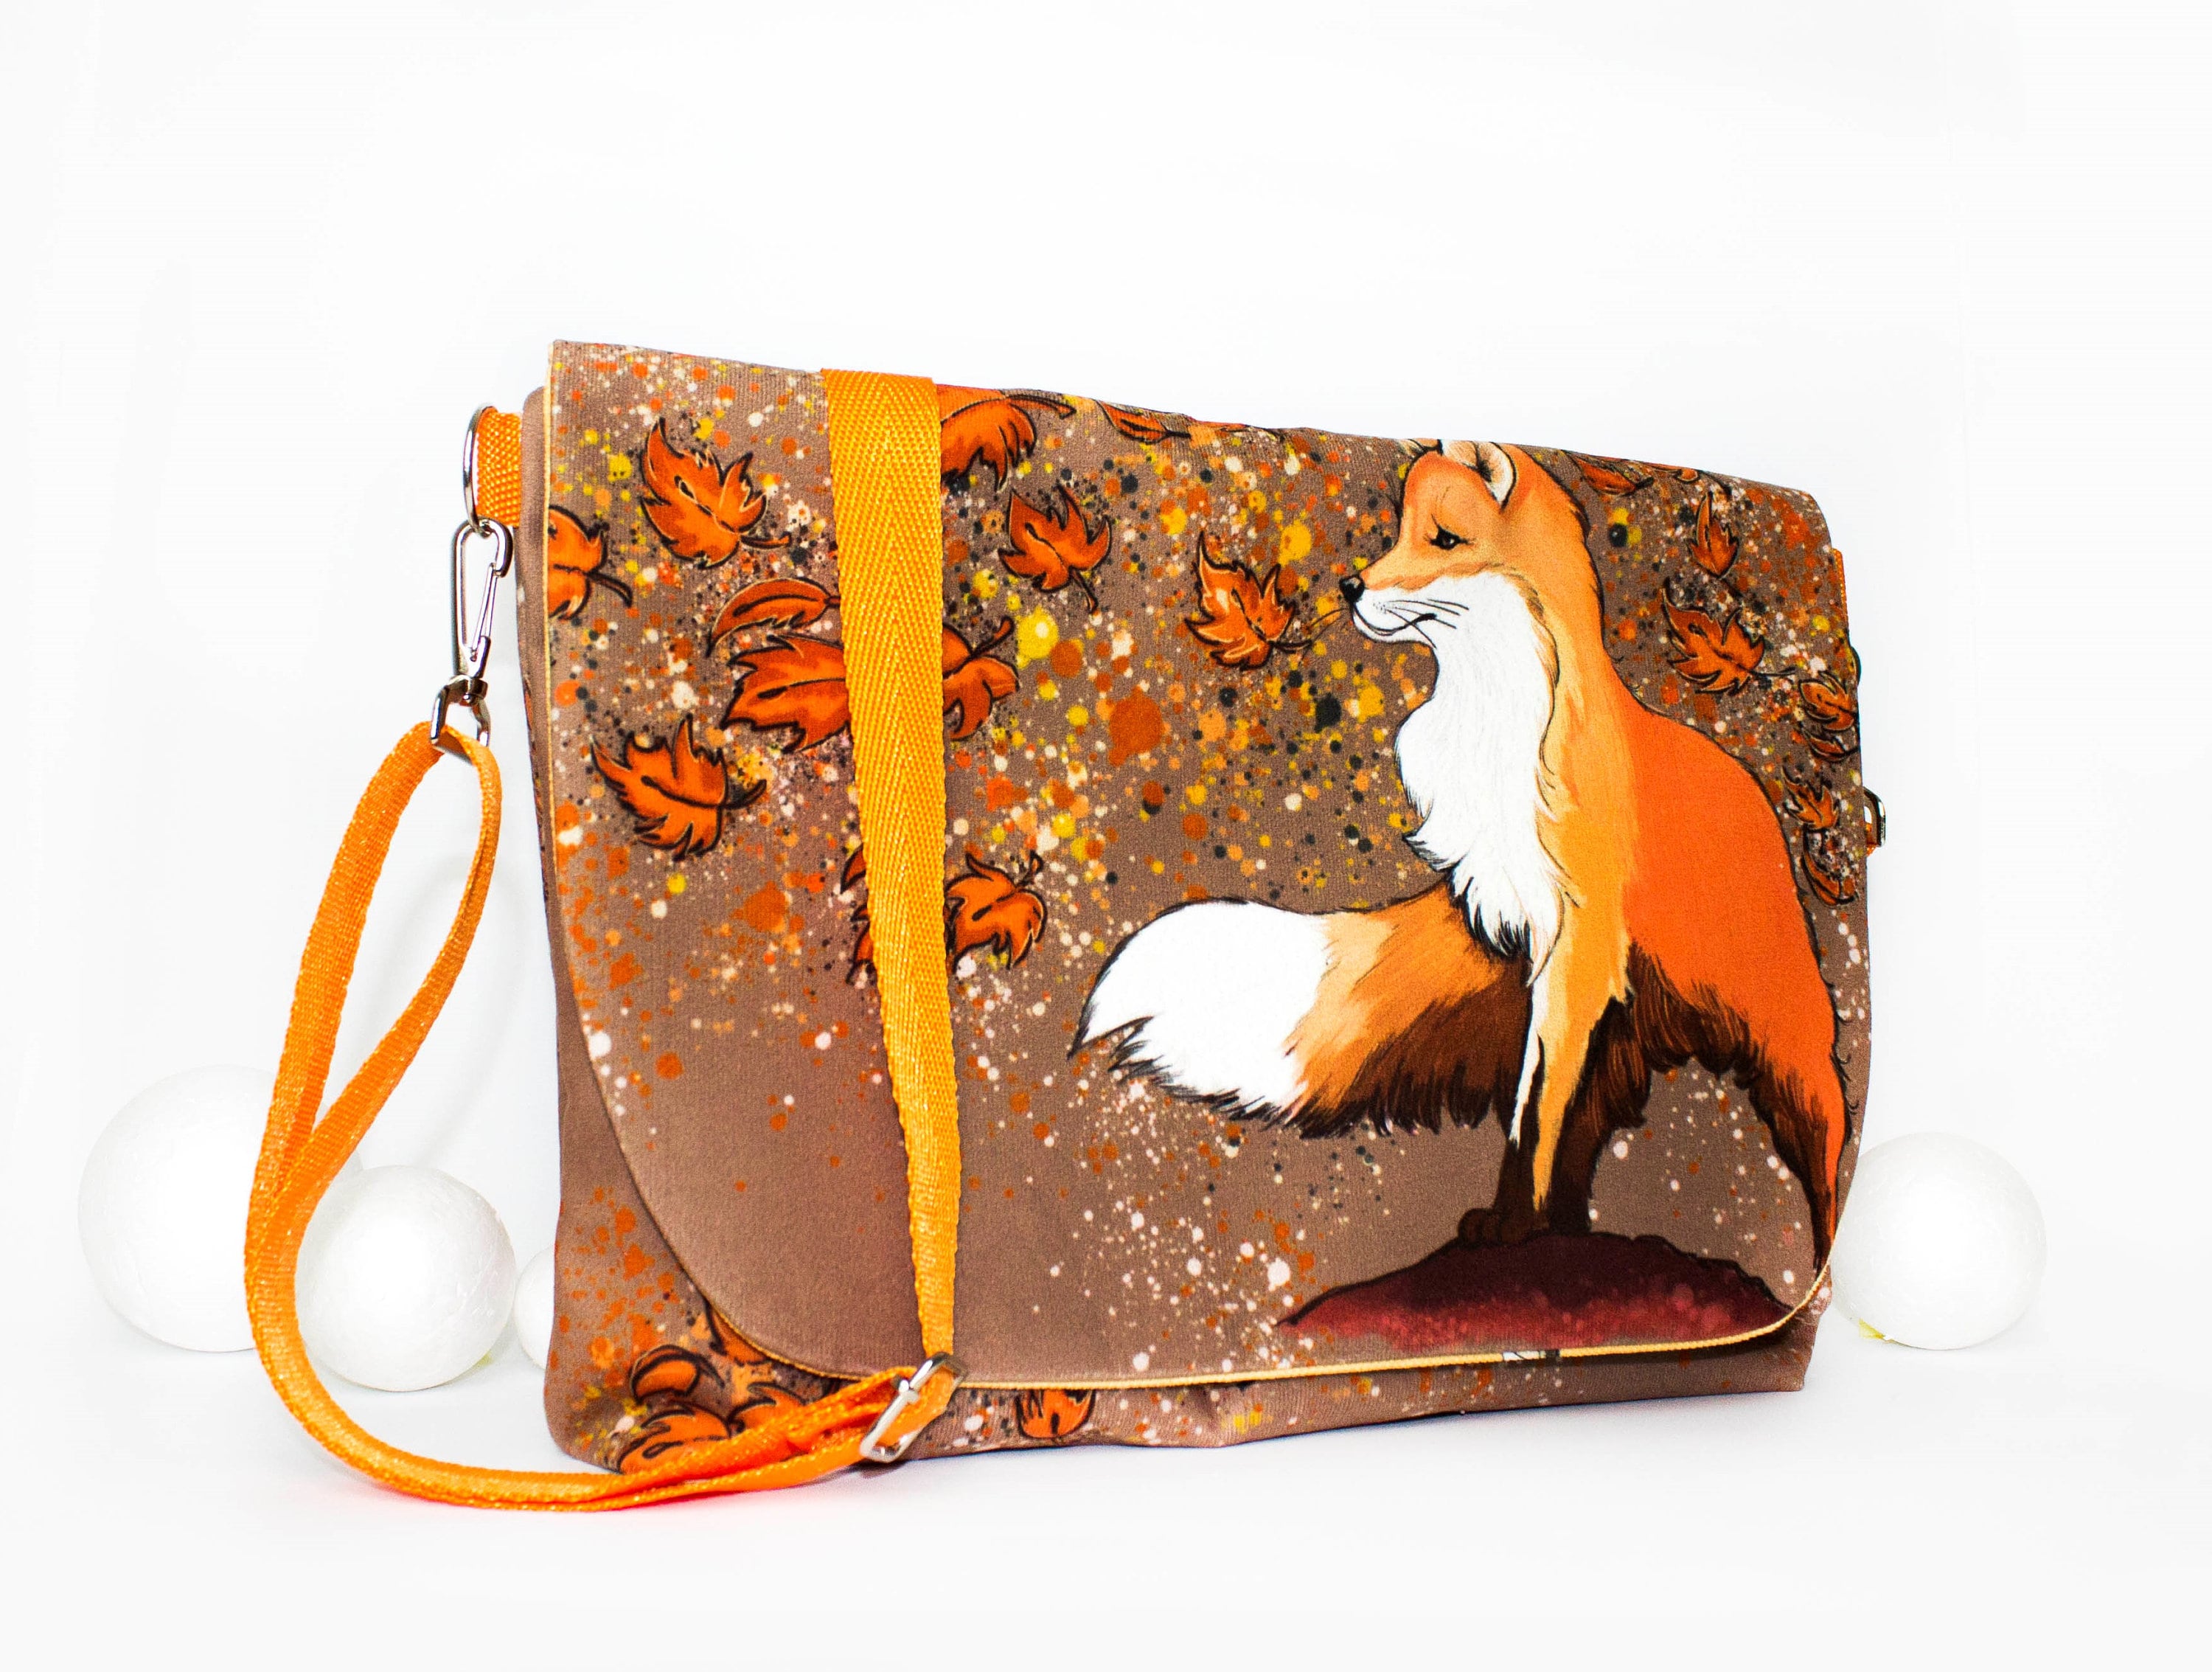 Tassen & portemonnees Luiertassen Wetbag "Fox" gepersonaliseerde natte zak badzak fox retro oranje van OXmade 